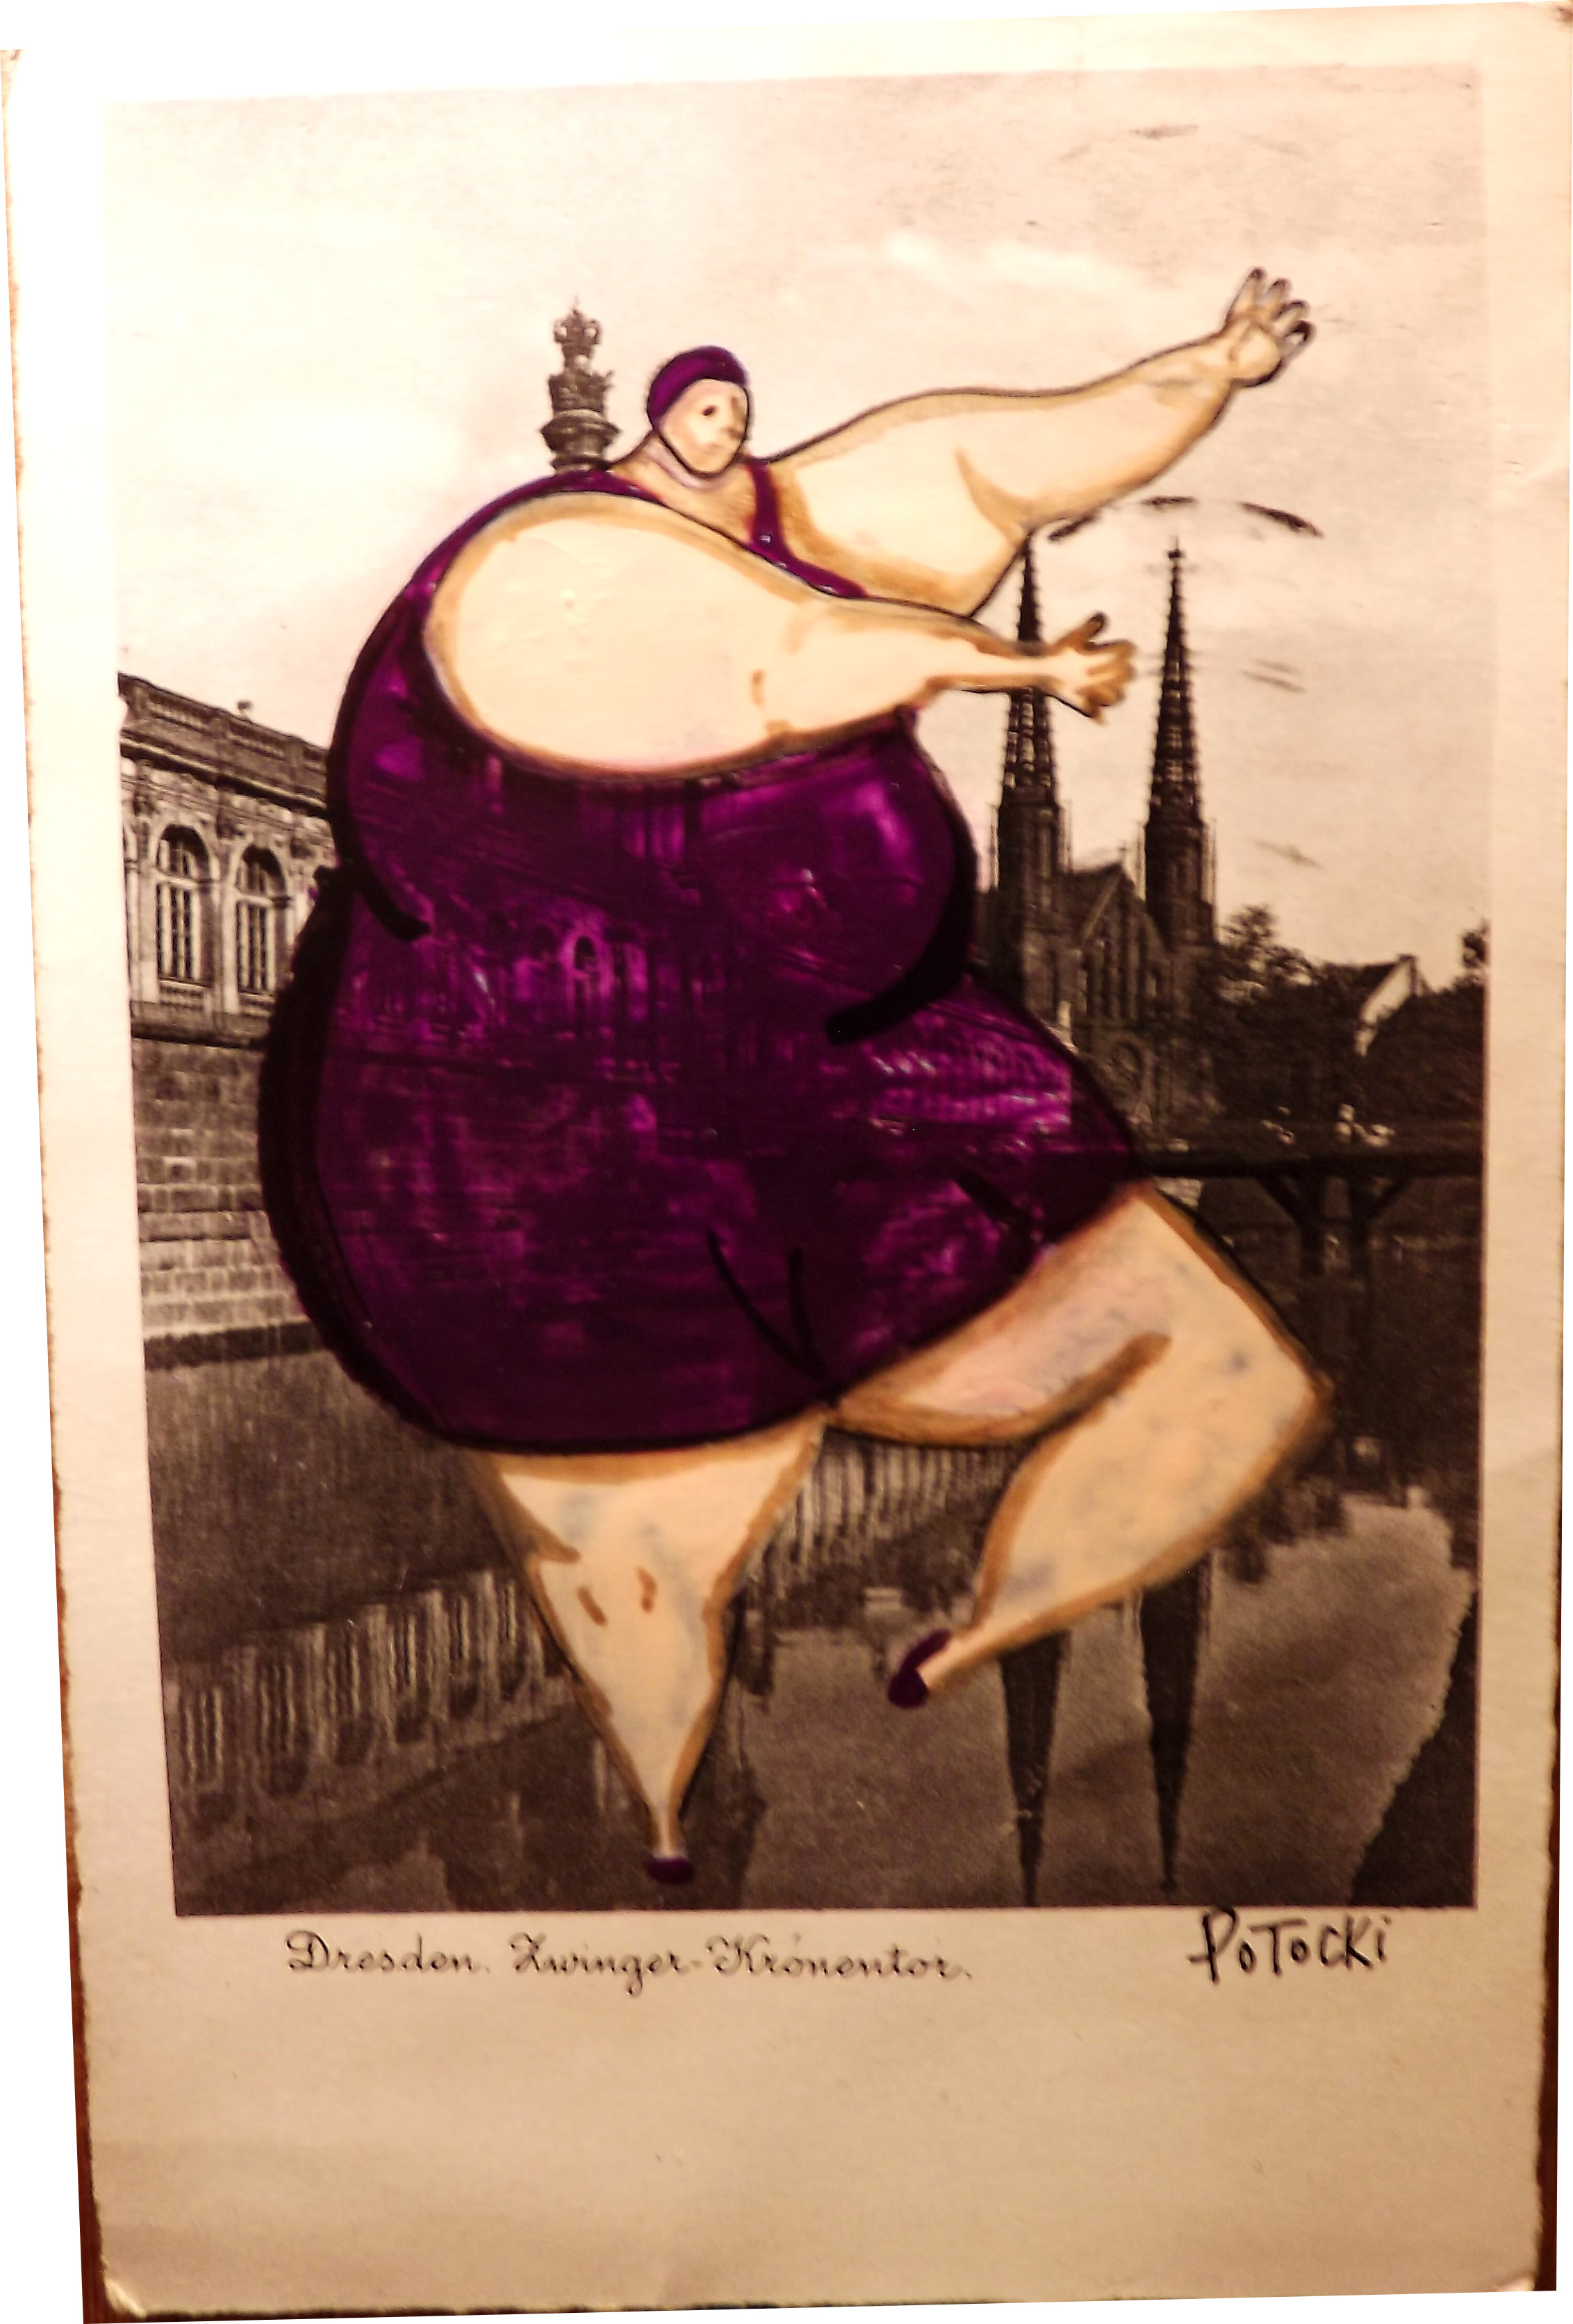 The BBW Dancer of Dresden – original art on vintage postcard